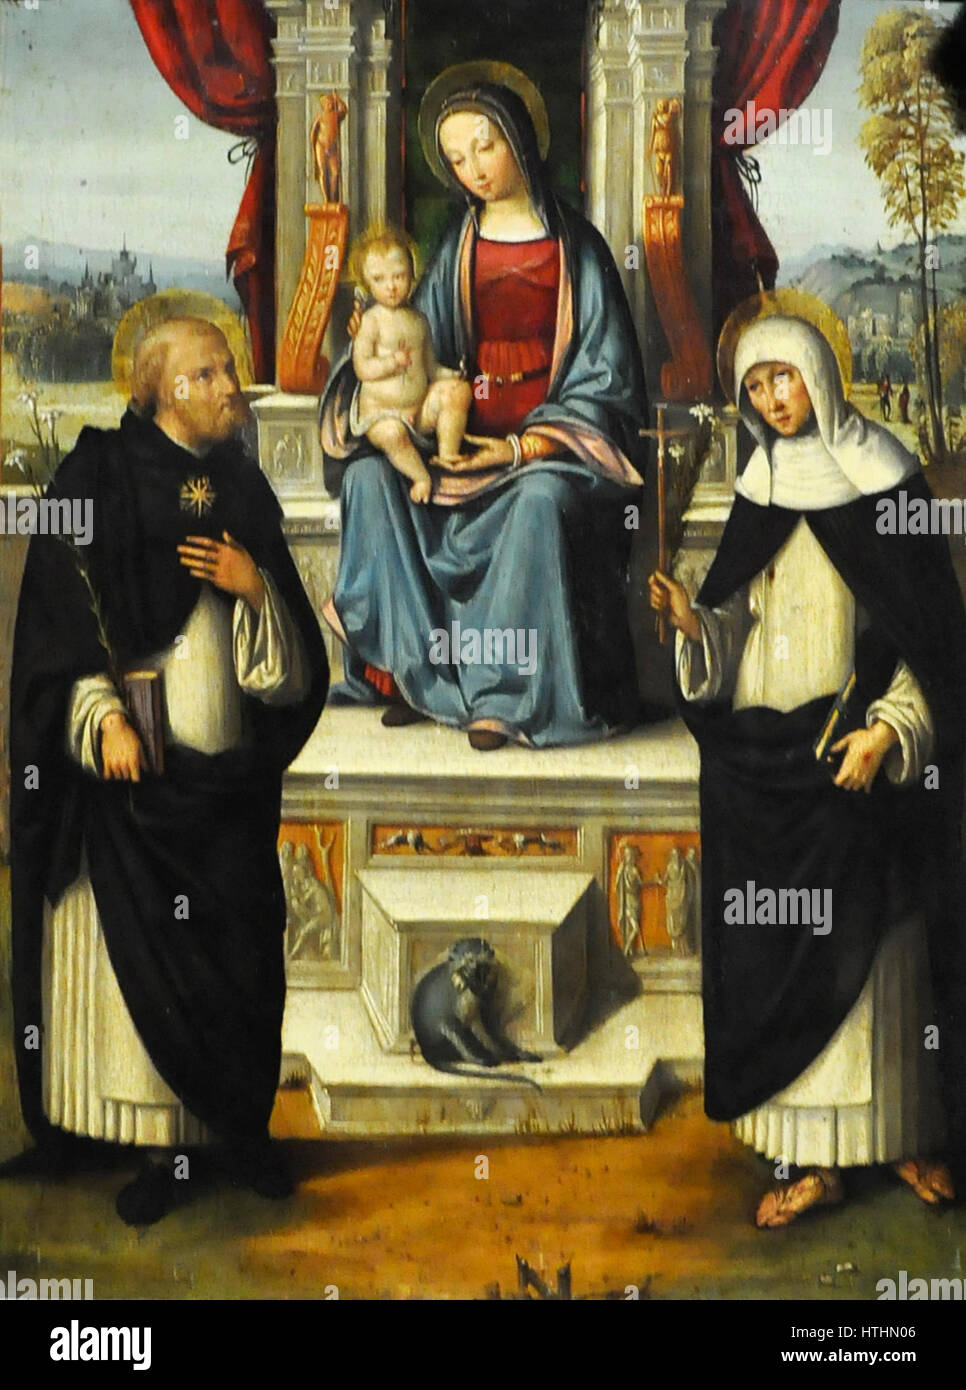 Benvenuto Tisi (Il Garofalo Maagd en 1481-1559) Genre rencontré Dominicus en Catharina Van Siena - National Gallery Londres 5-3-2015 11-05-39 Banque D'Images